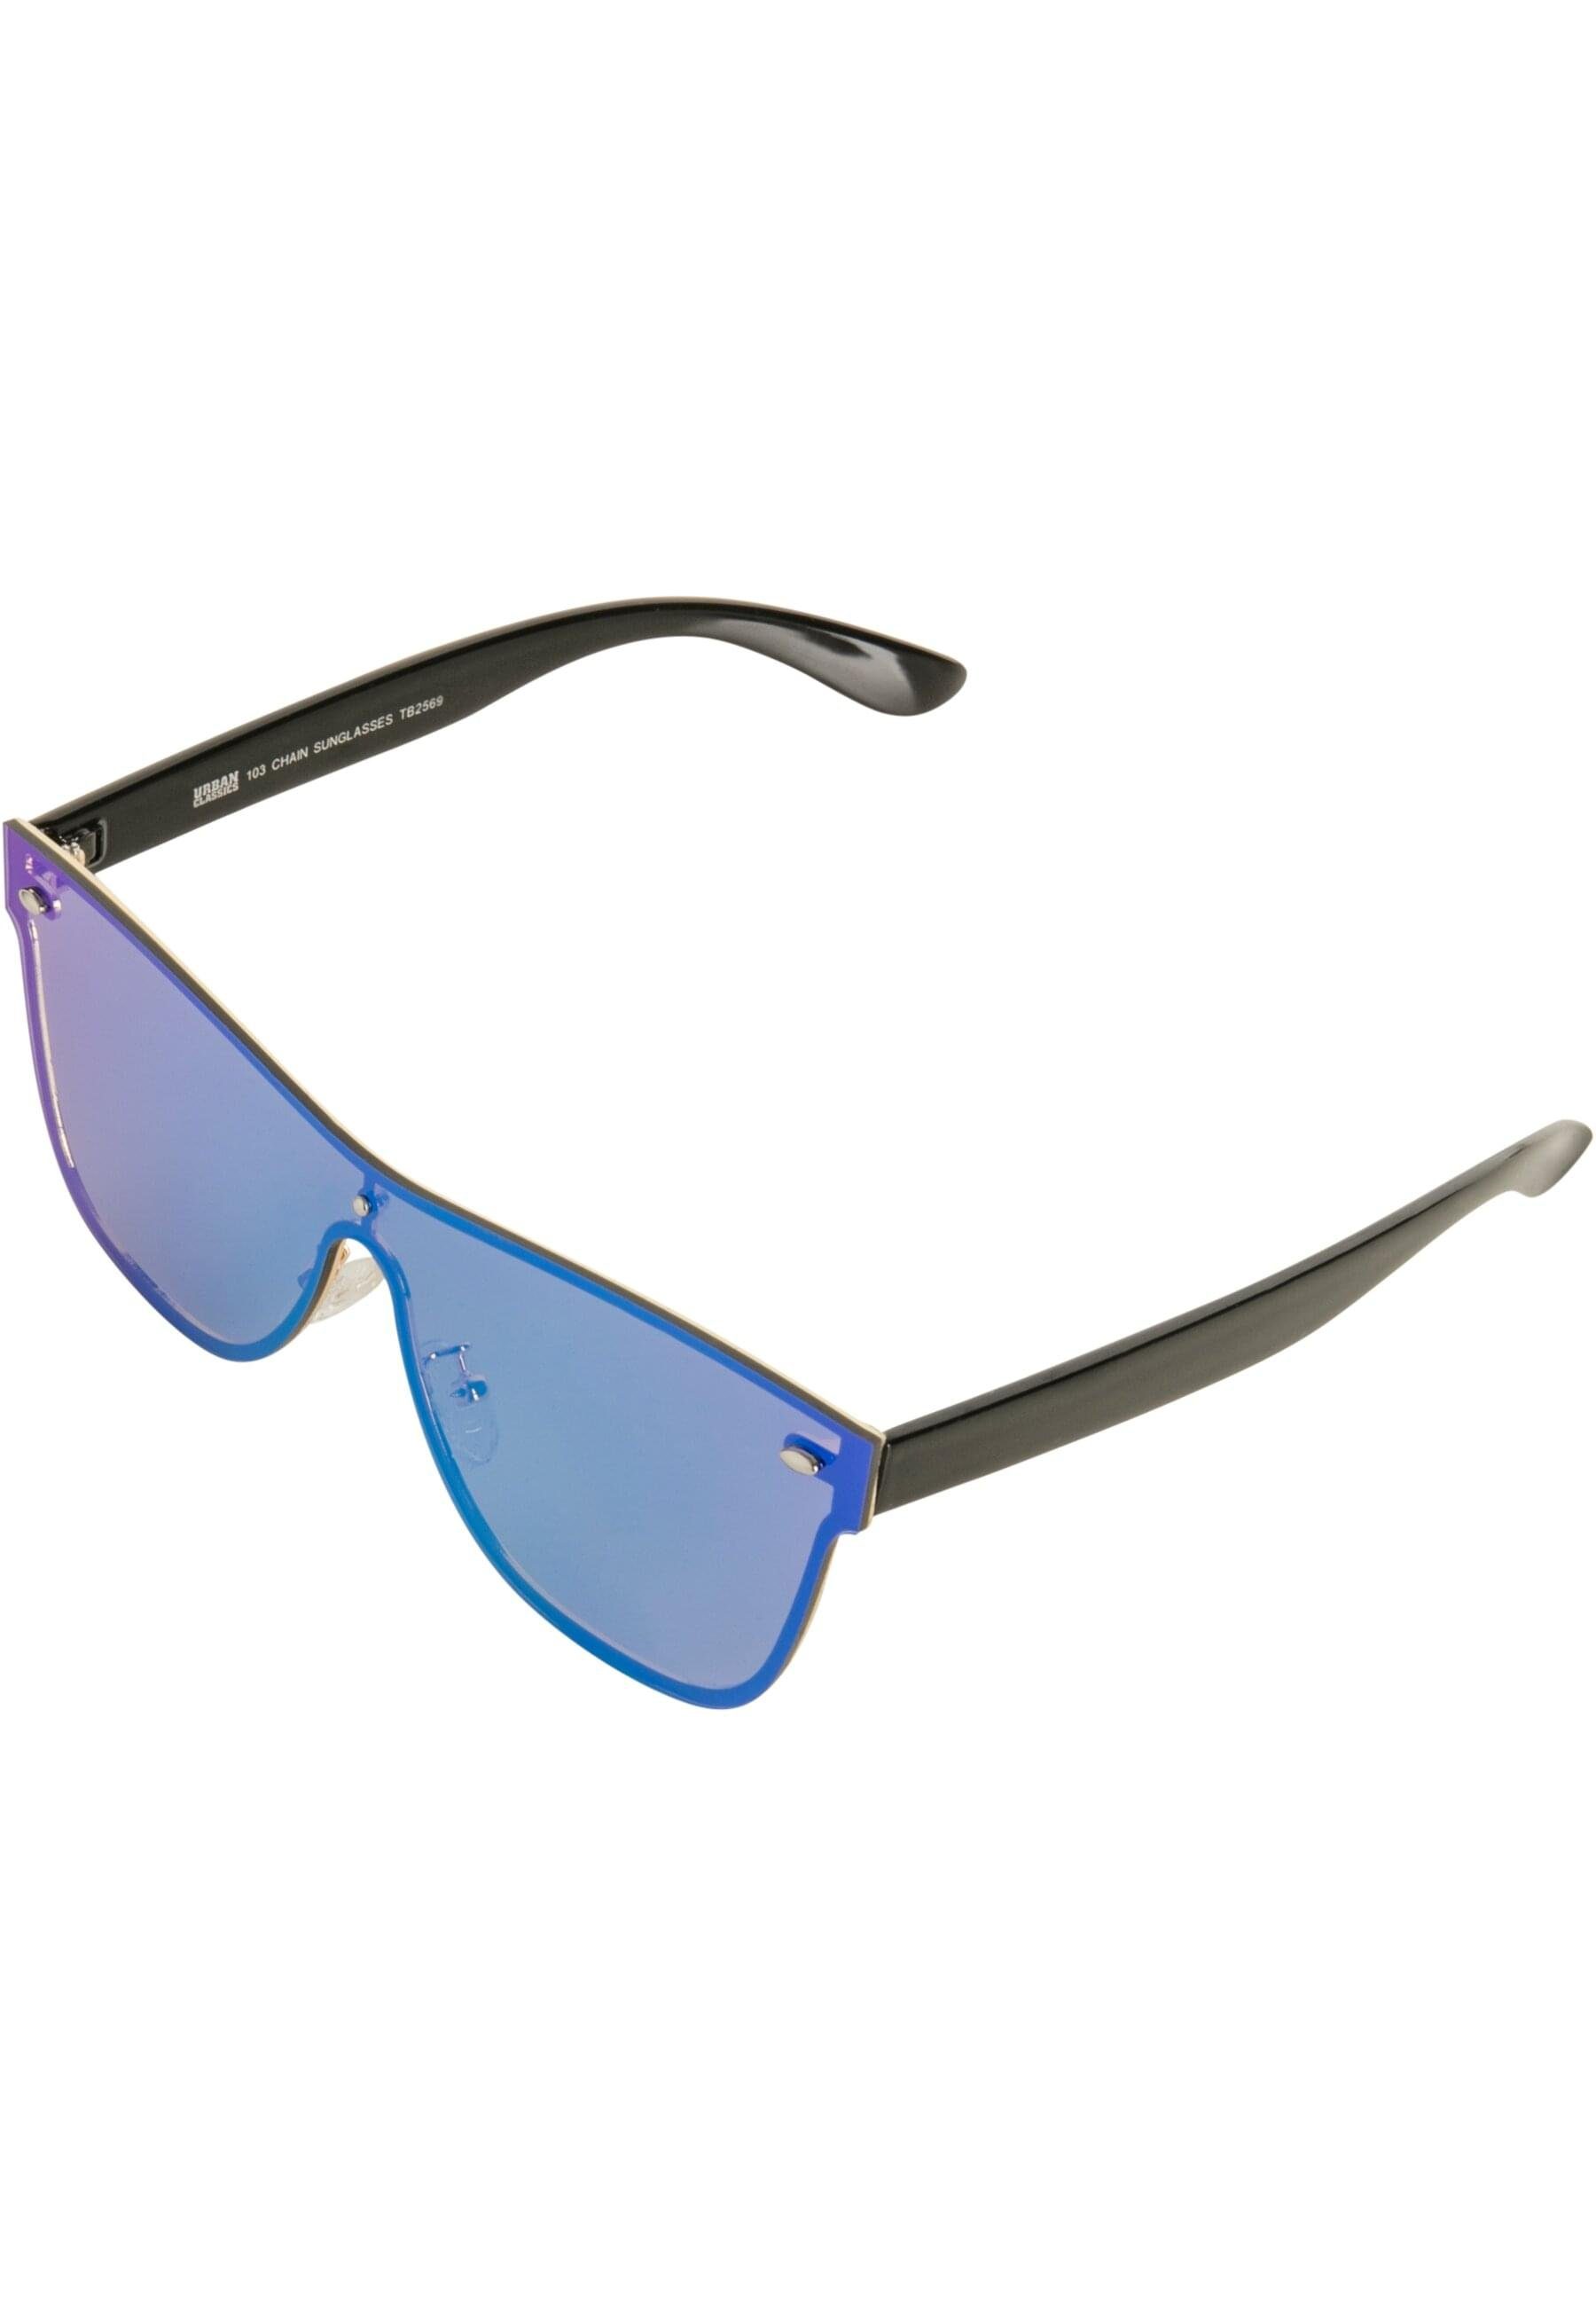 CLASSICS 103 Chain blk/blue URBAN Sonnenbrille Sunglasses Unisex